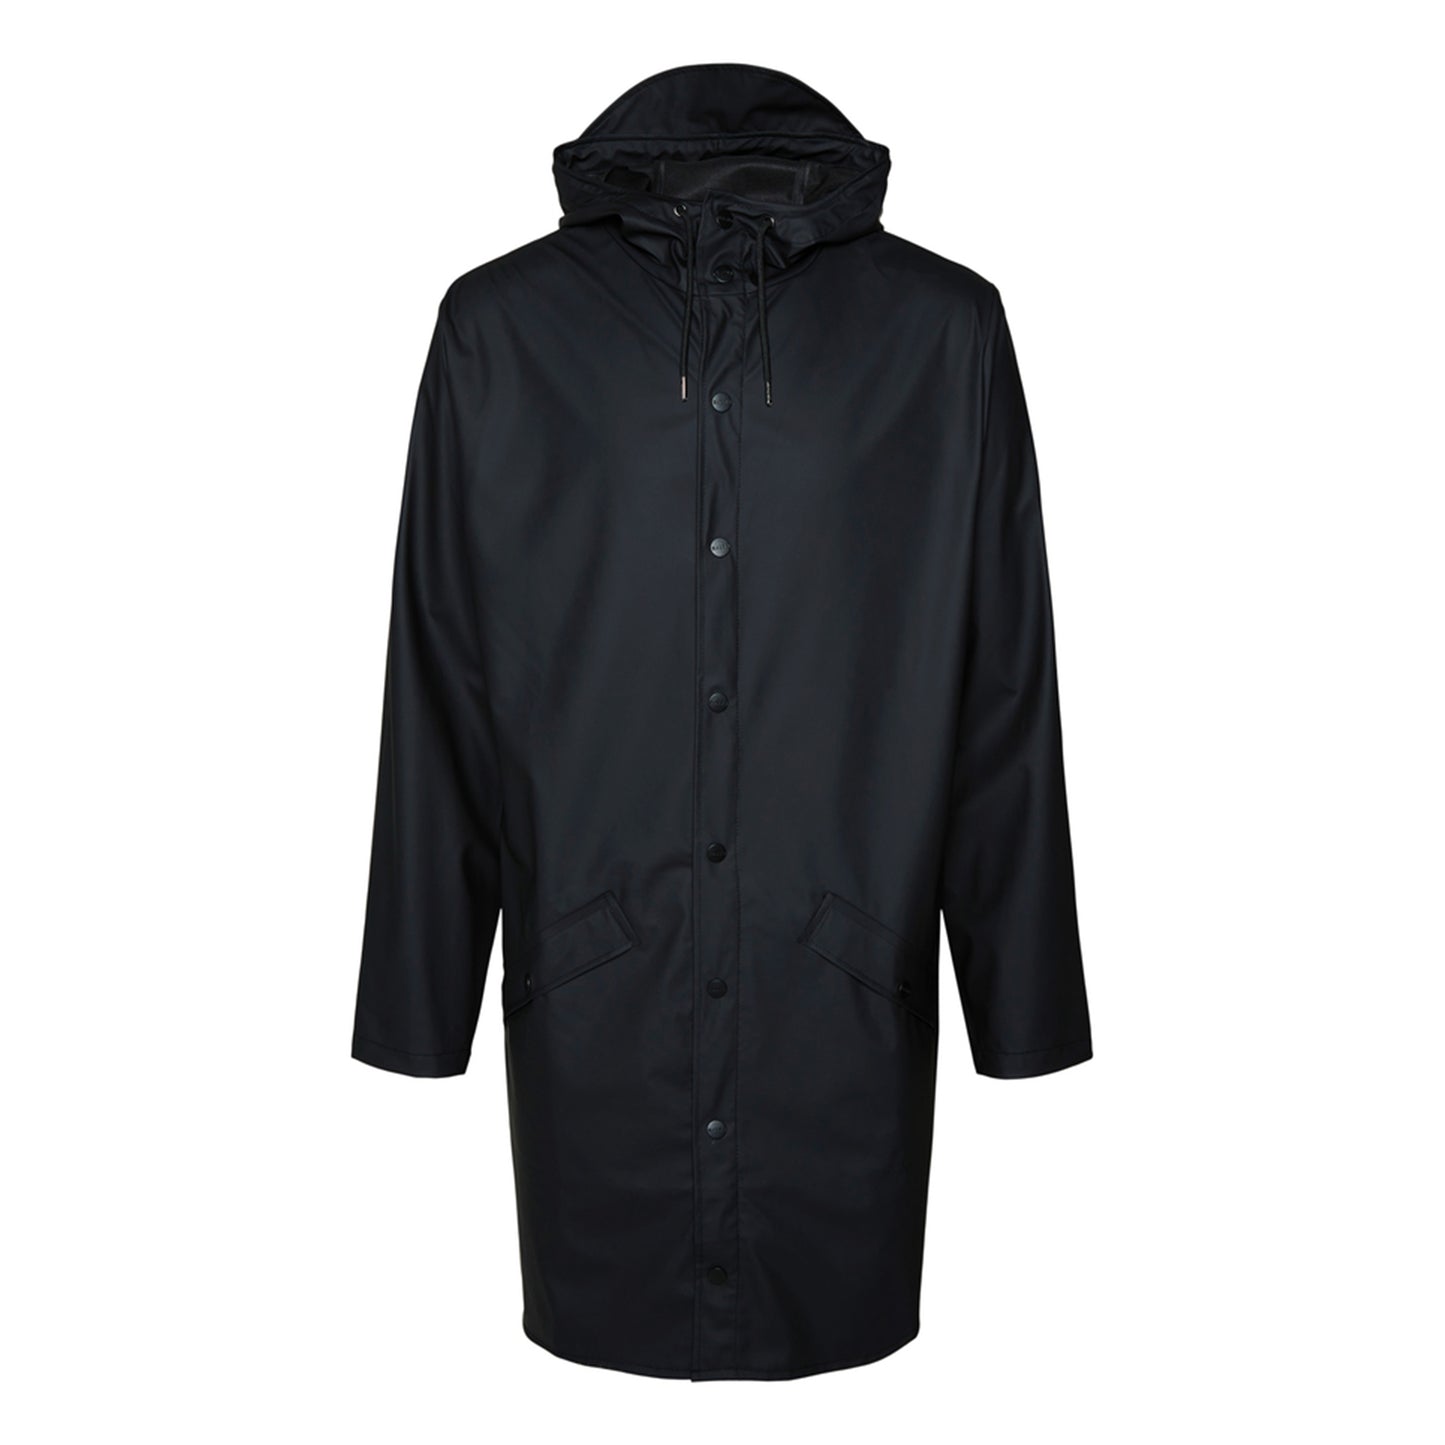 Rains long jacket - black